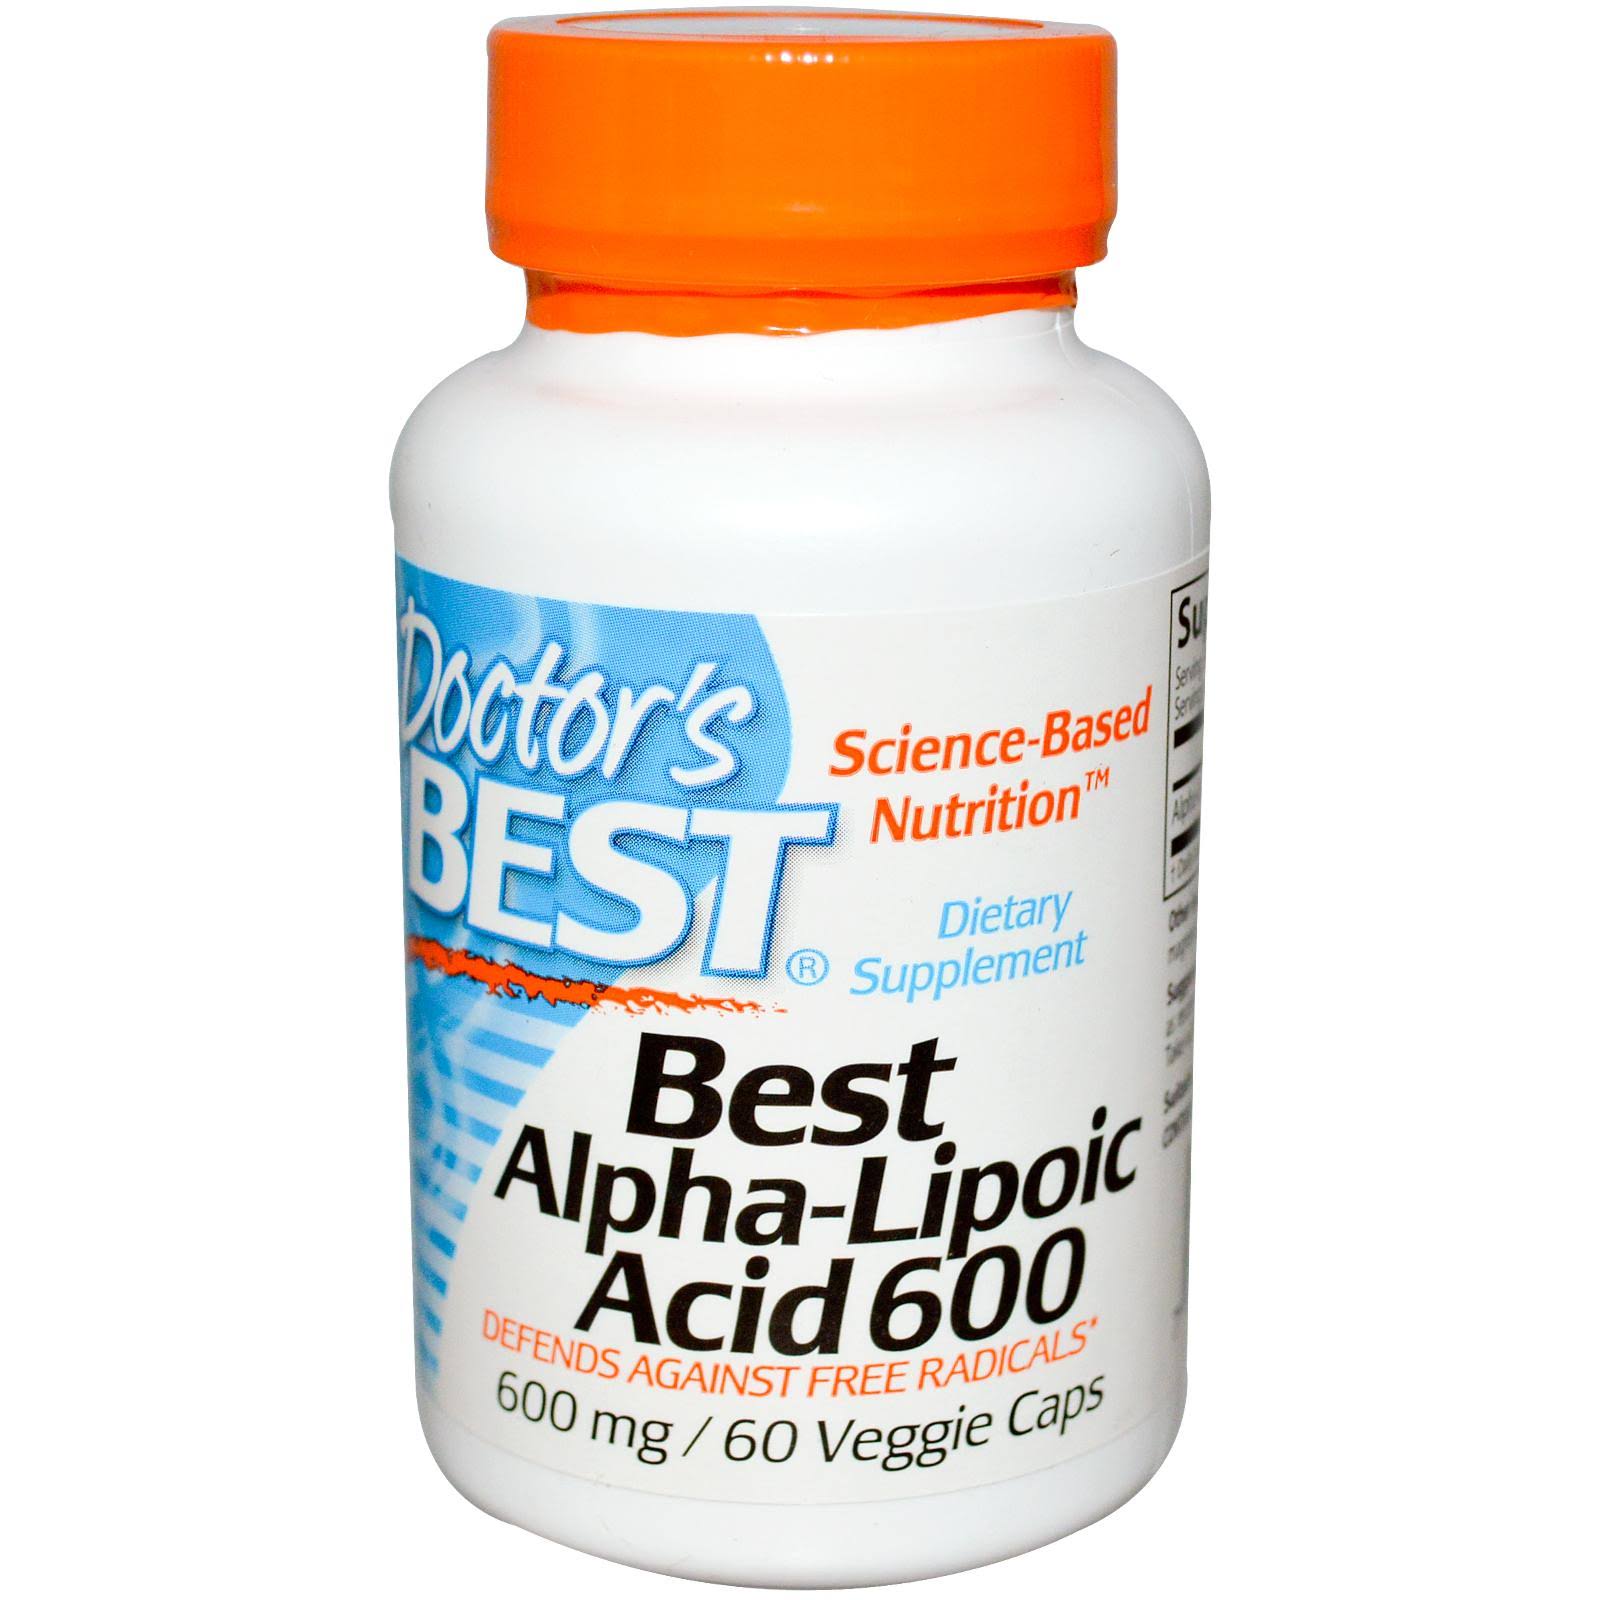 Doctor's Best Best Alpha-Lipoic Acid Vegetable Capsules - 600mg, 60 Capsules